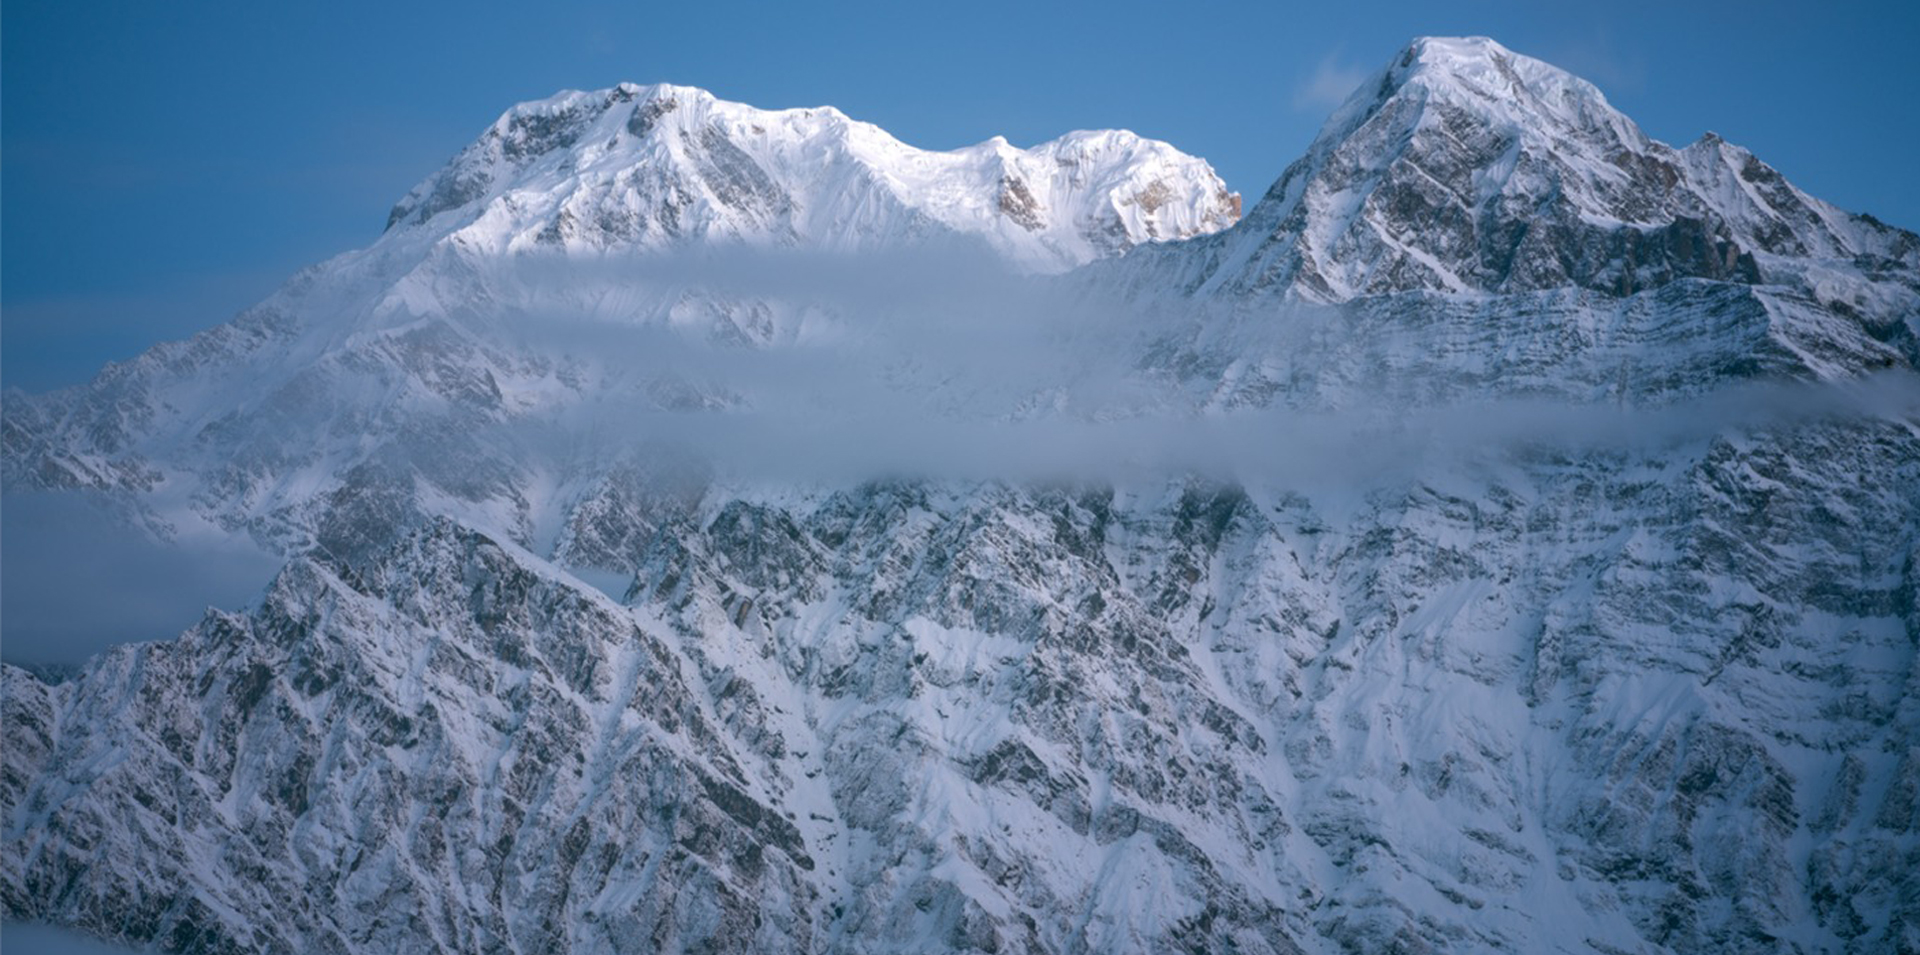 Annapurna Range from Mardi